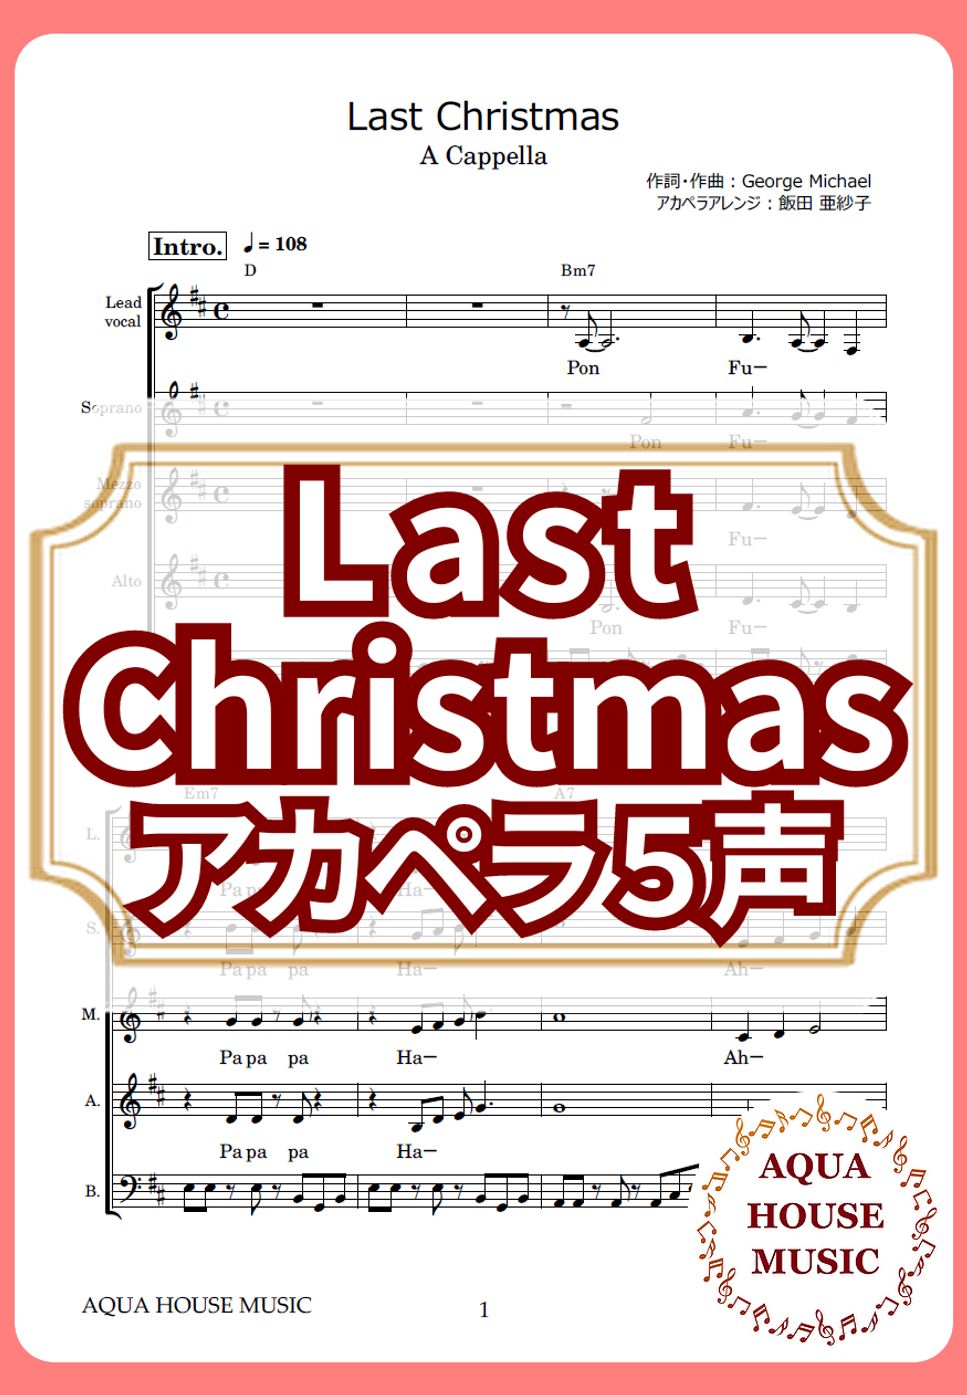 Wham! - Last Christmas (アカペラ楽譜♪５声ボイパなし) by 飯田 亜紗子